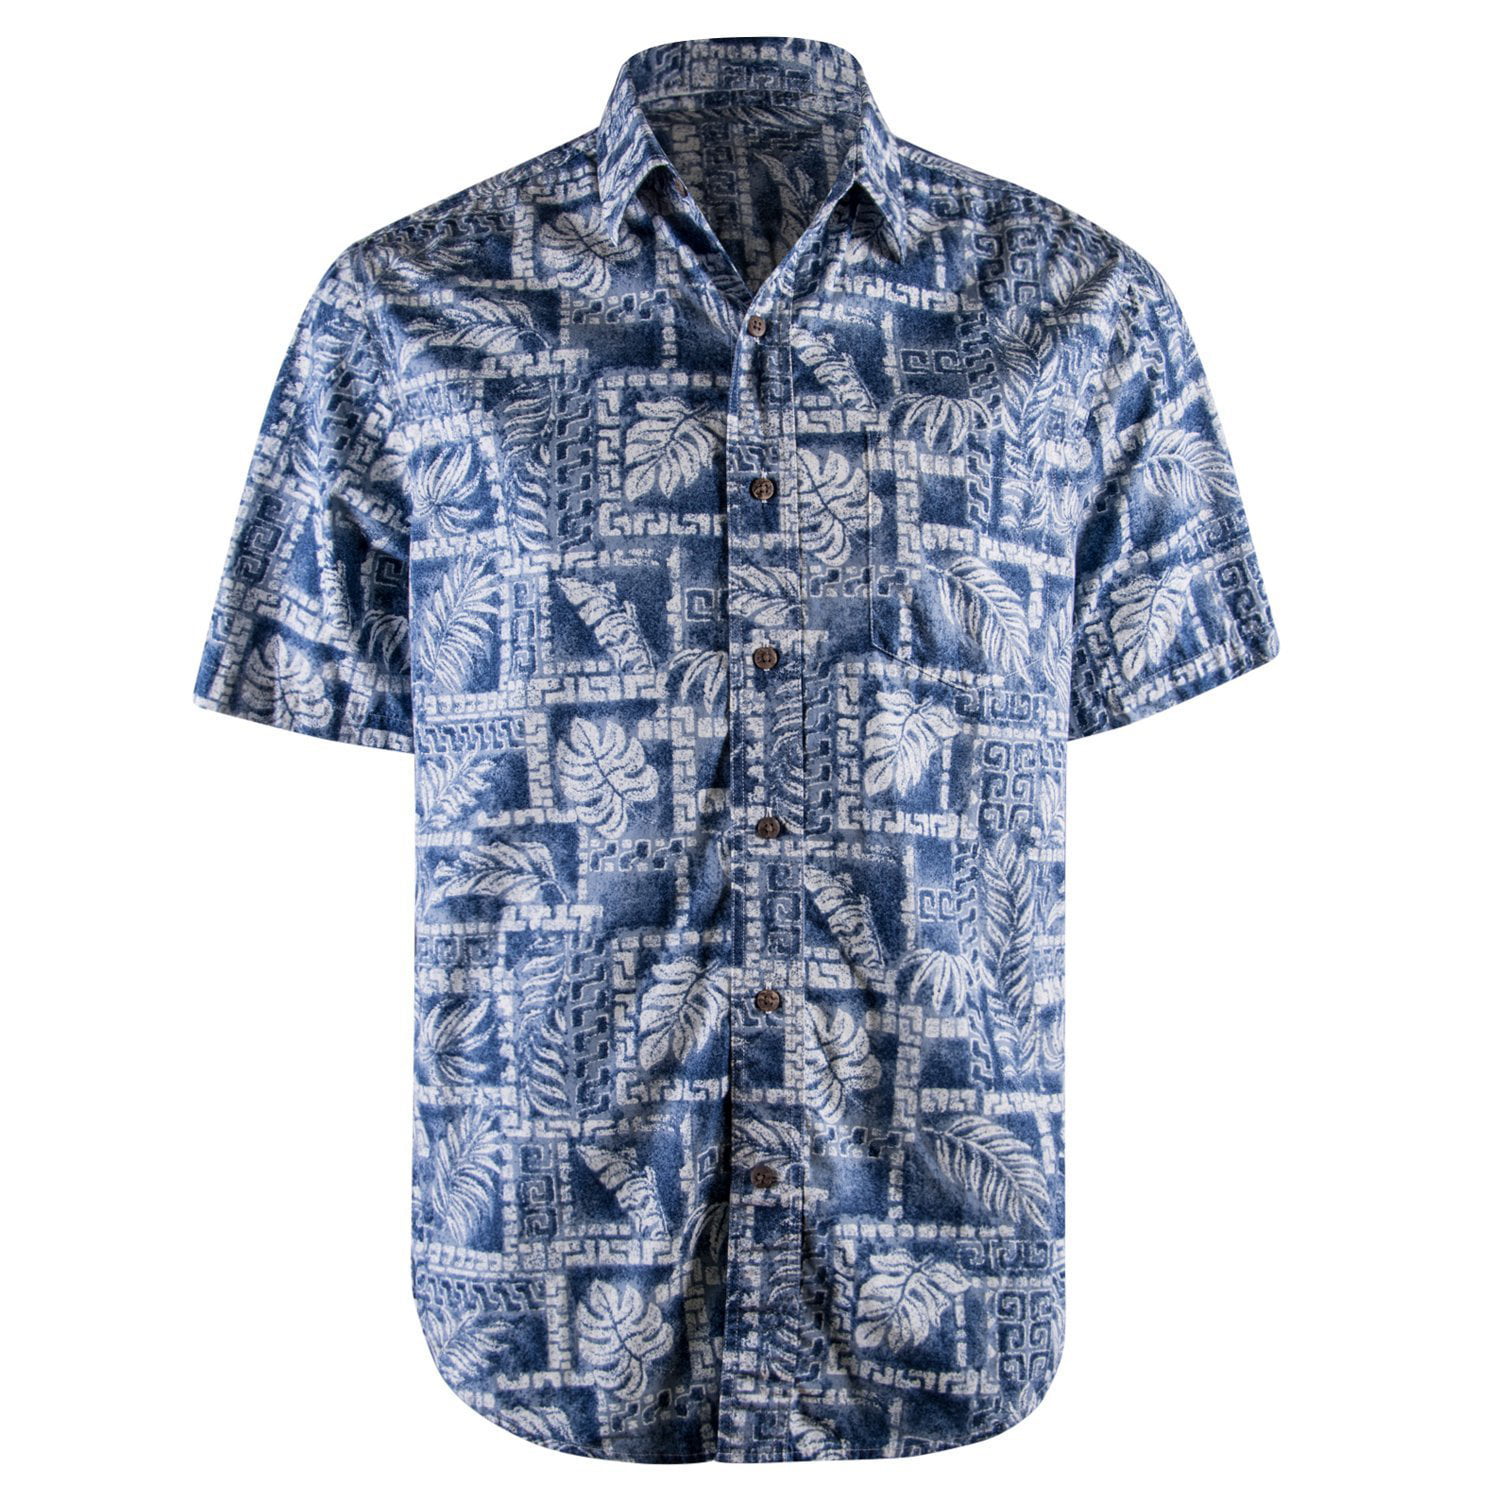 Mens Hawaiian Shirts Summer Casual Short Sleeve Button Down Tops Leisurely Vintage Printed Linen Beach Shirts Blouse 